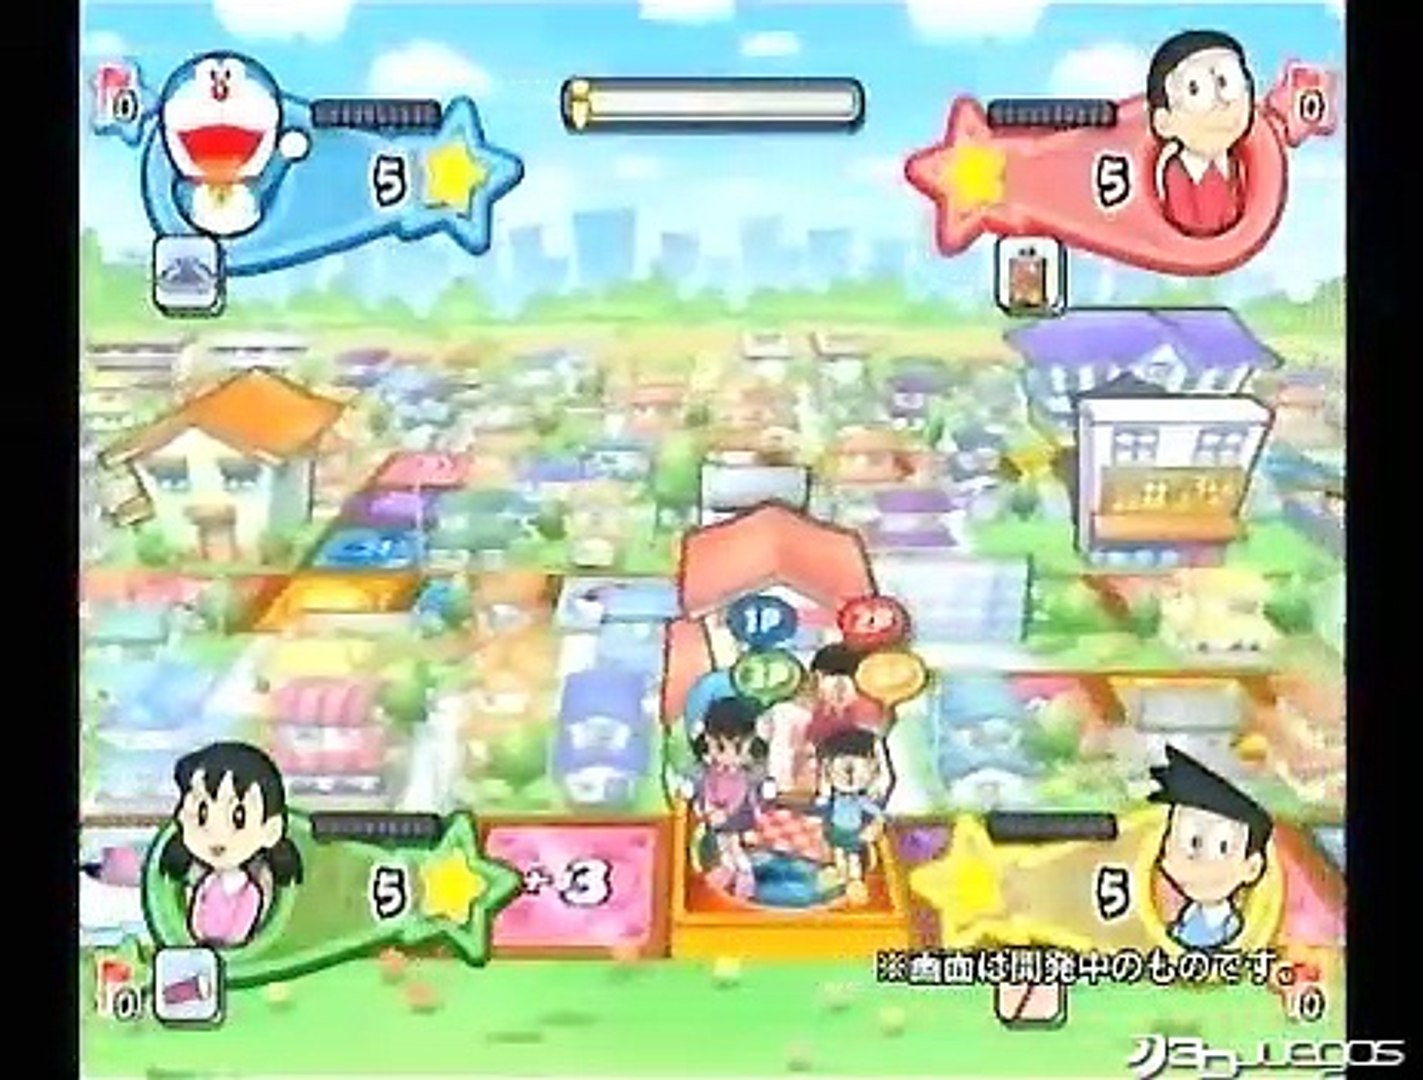 koepel lippen Omgaan met Doraemon Wii: Trailer oficial - Vídeo Dailymotion